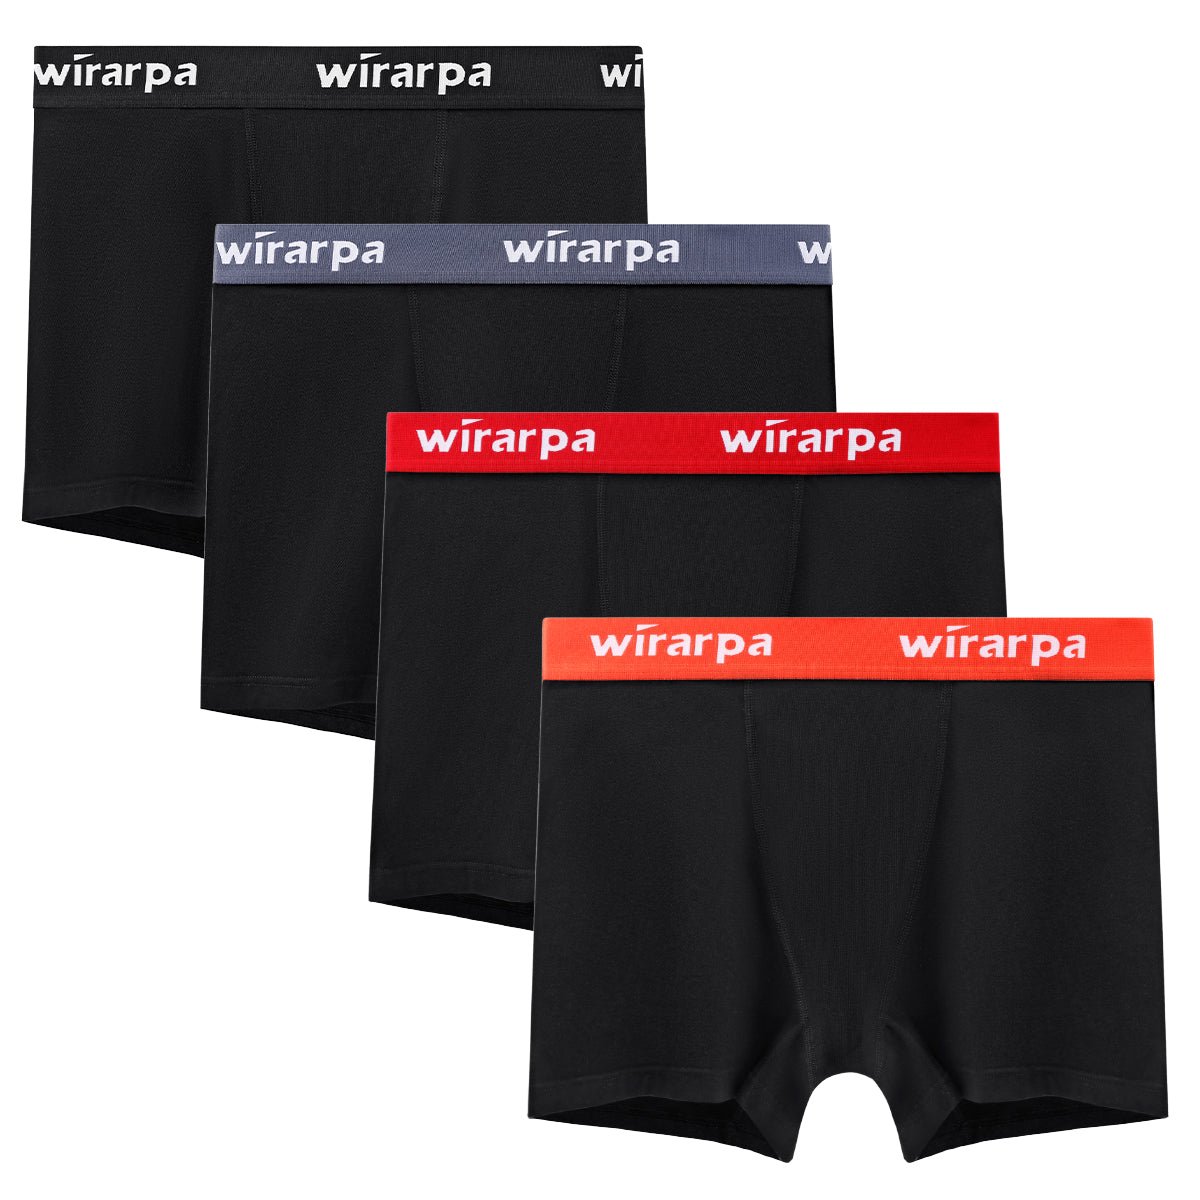 wirarpa Womens Anti Chafing Cotton Underwear Boy Shorts Long Leg Boyshorts  Panties 3 Pack